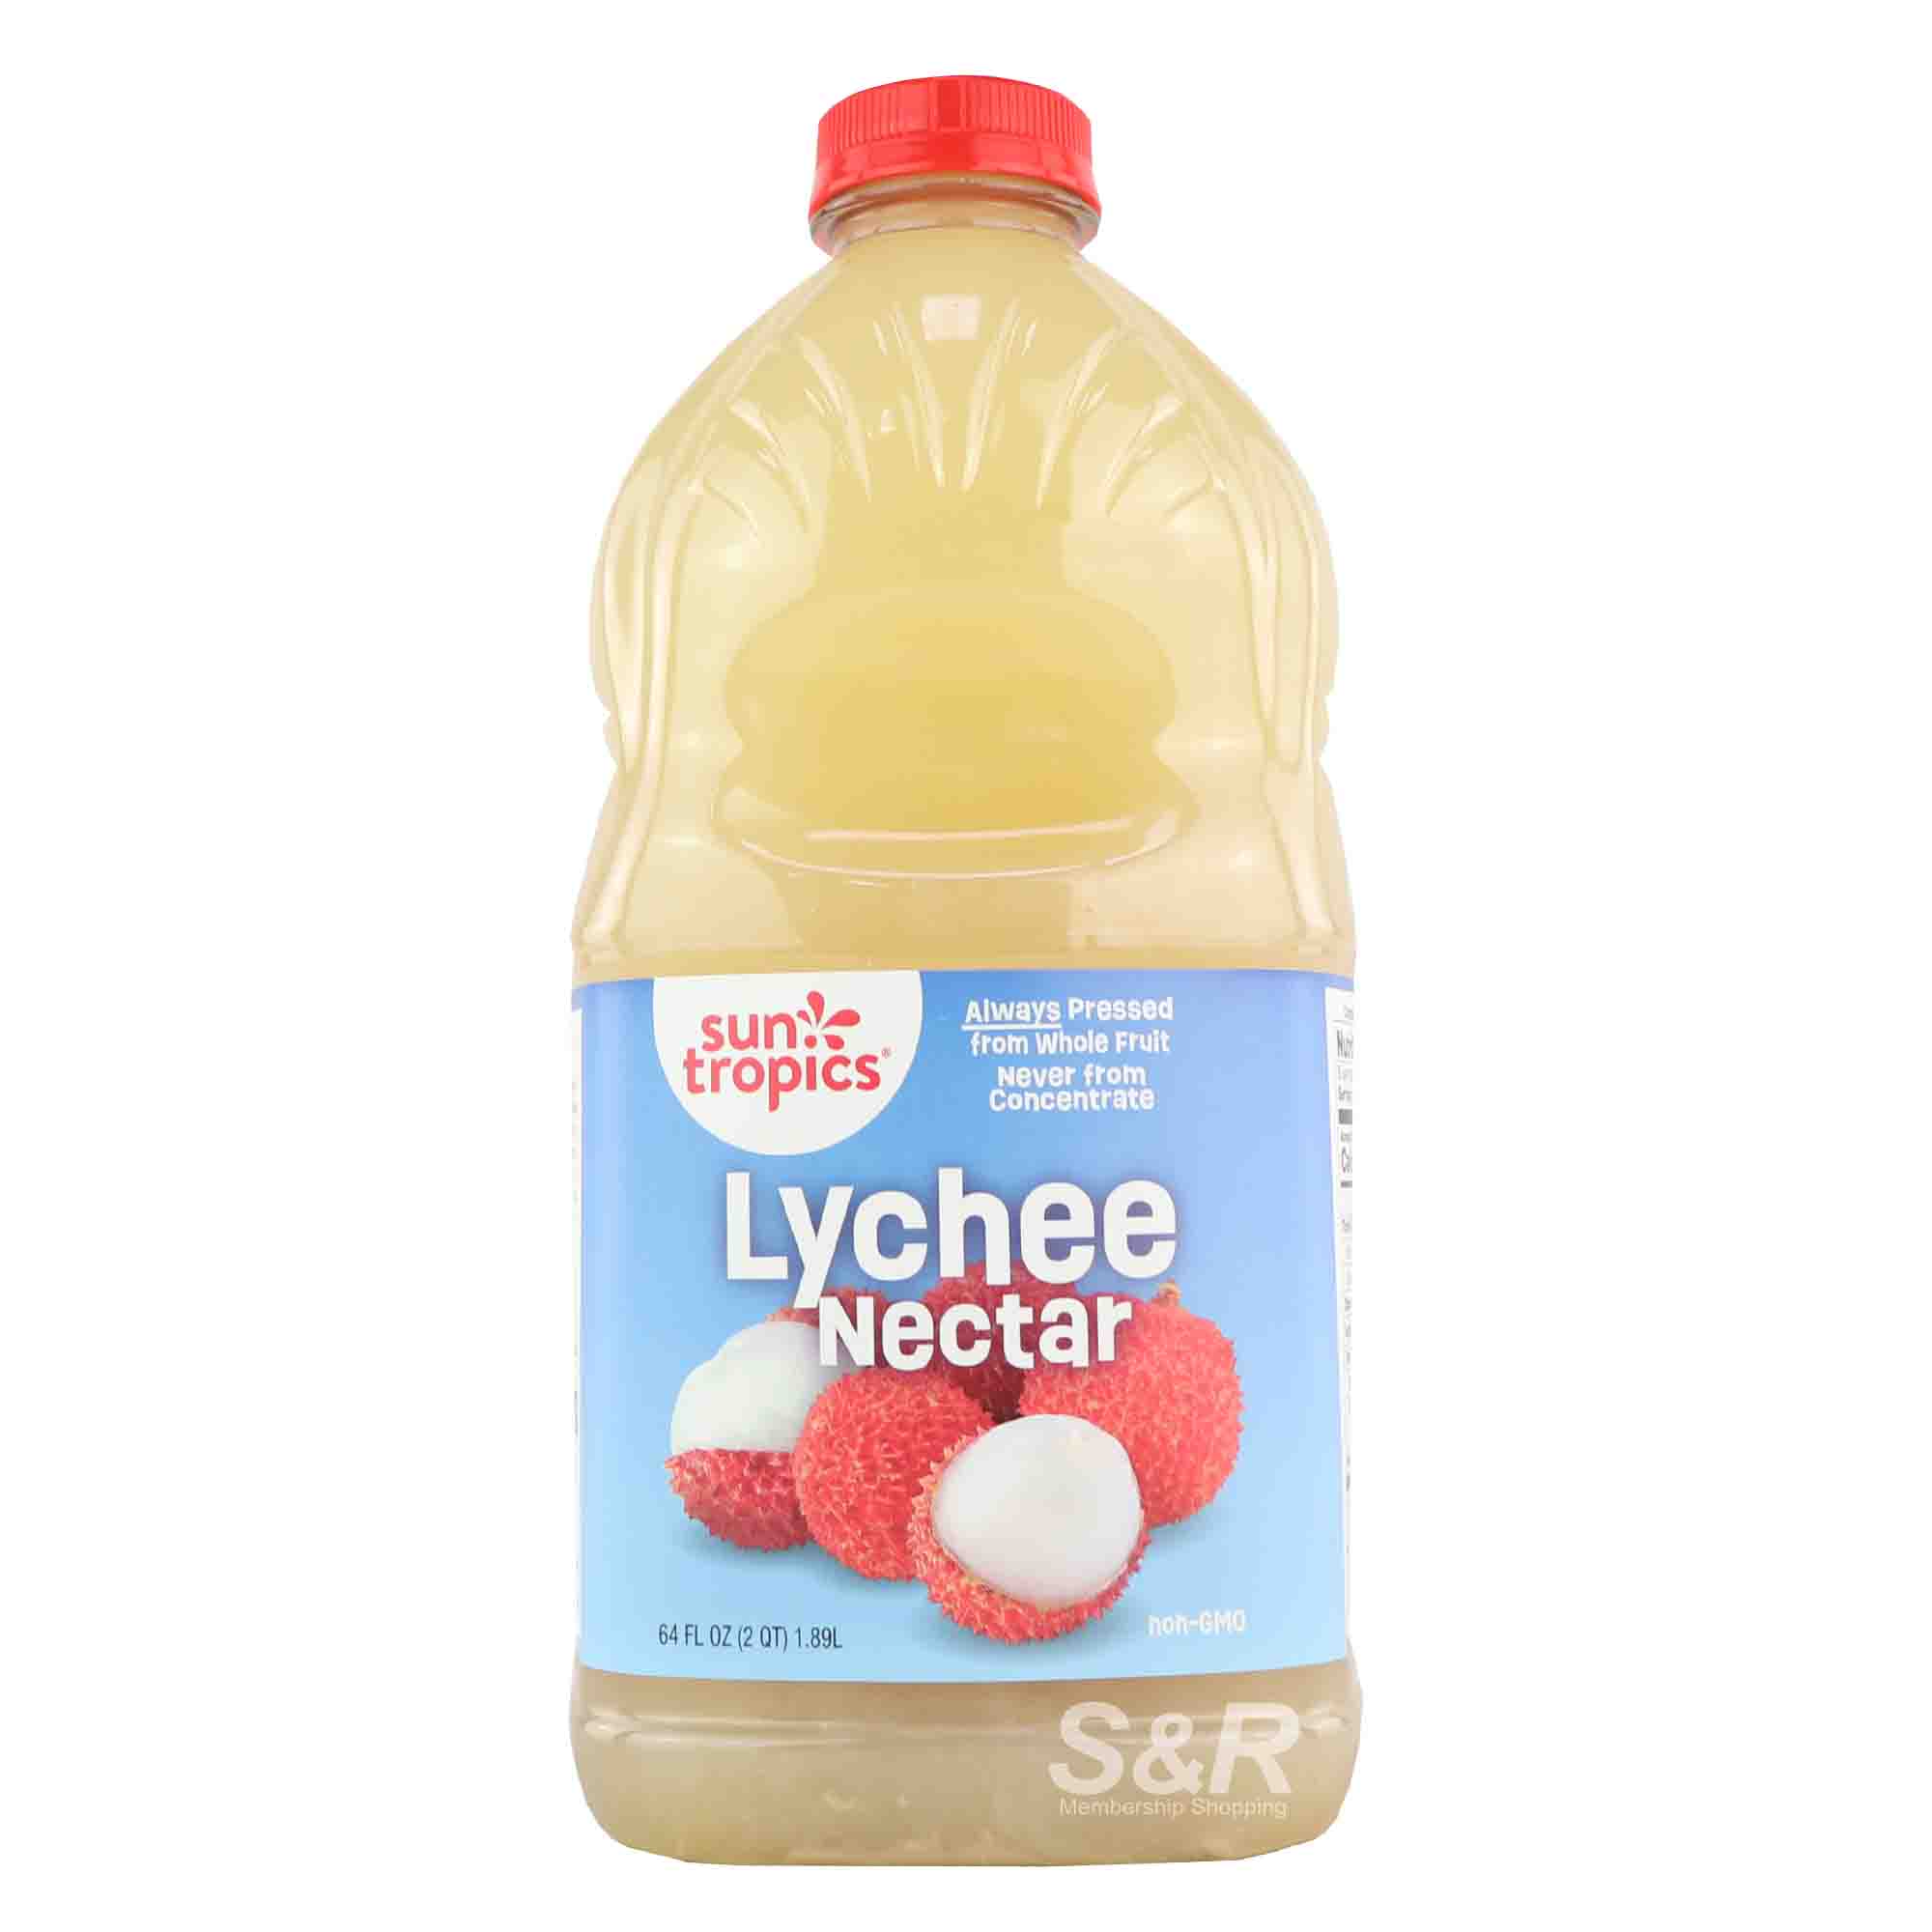 Sun Tropics Lychee Nectar Juice 1.89L